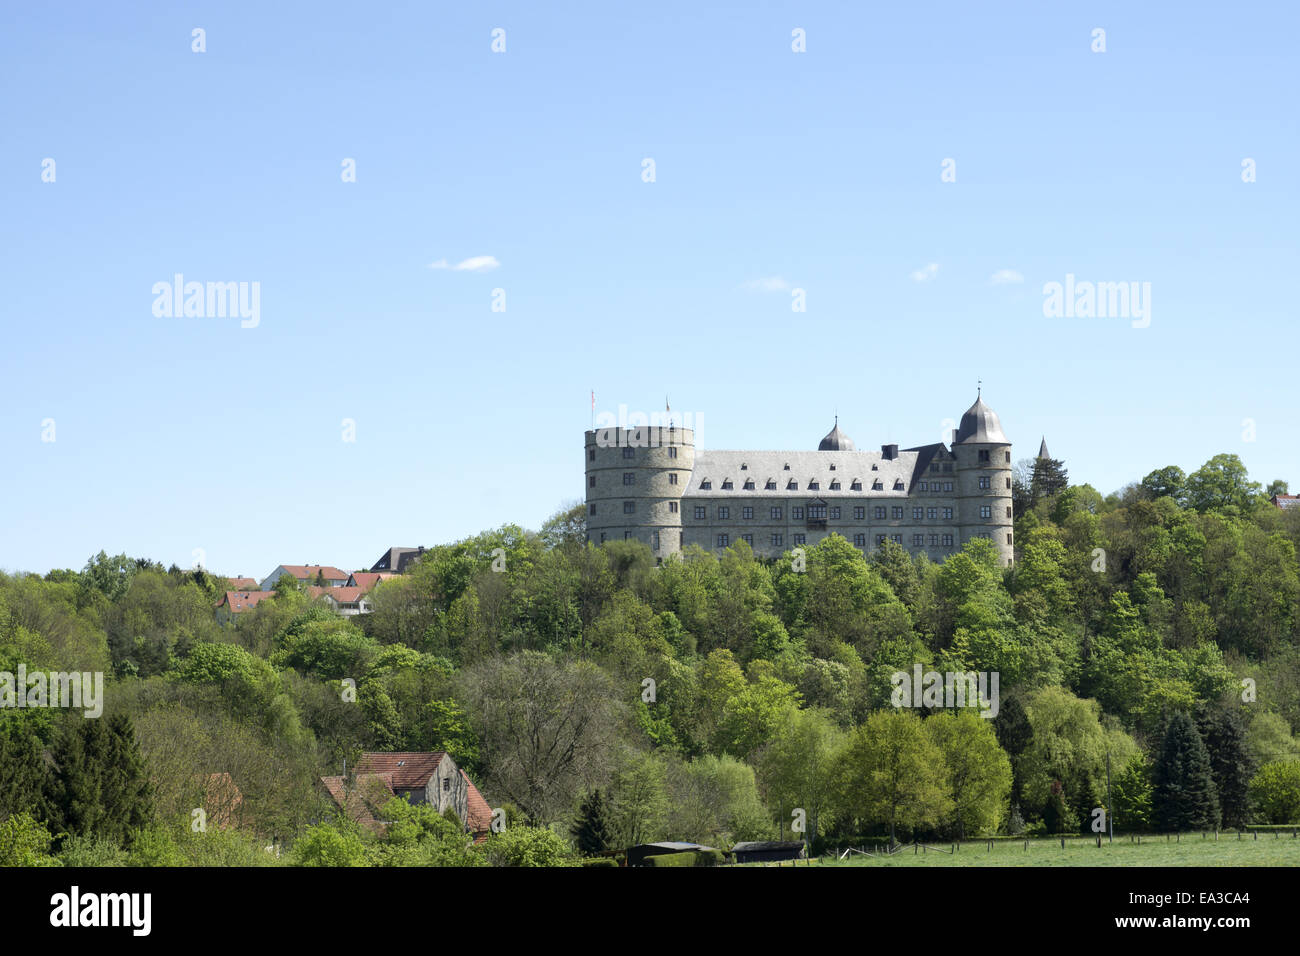 Wewelsburg, distretto di Paderborn, Germania Foto Stock